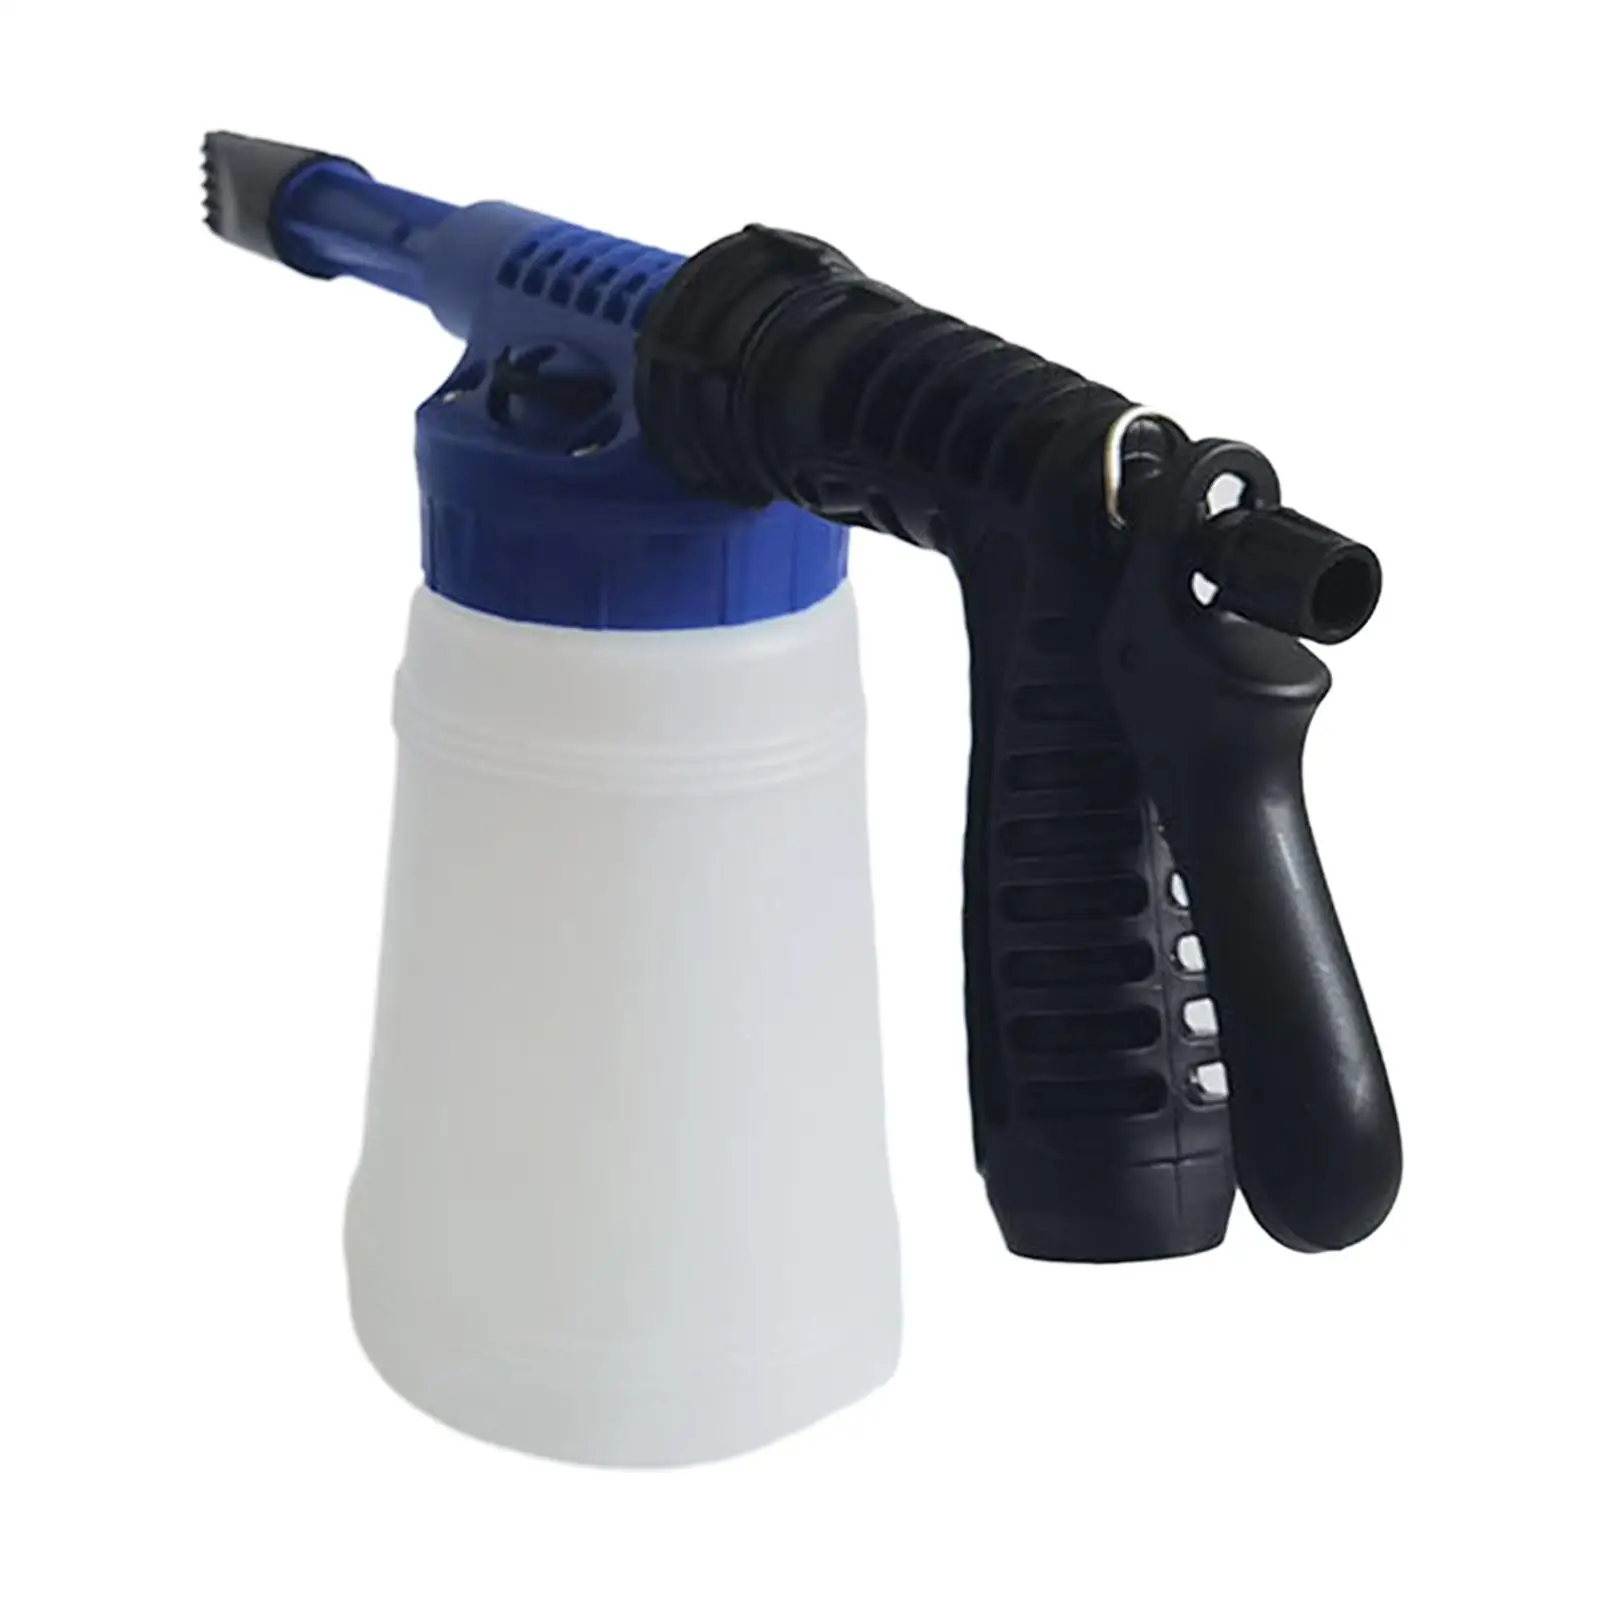 Car Wash Foam Sprayer Handheld Ergonomic Handle Labor Saving Multifunctional Adjustable for Washing Cars Motorbikes Durable